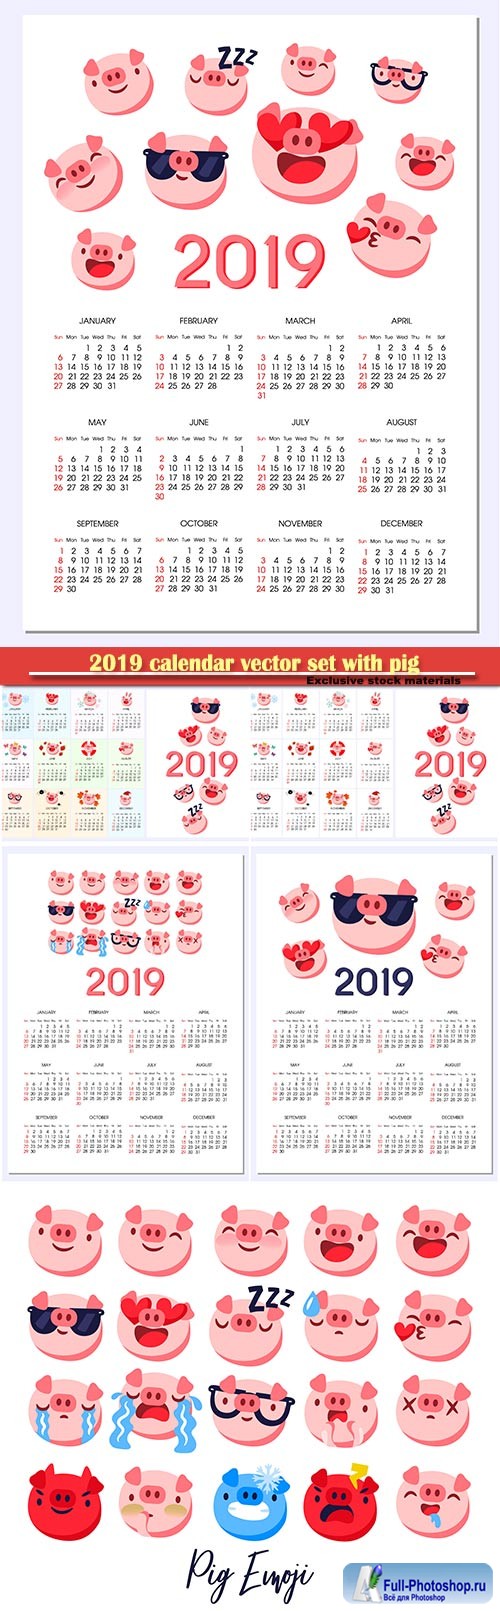 2019 calendar vector set with pig